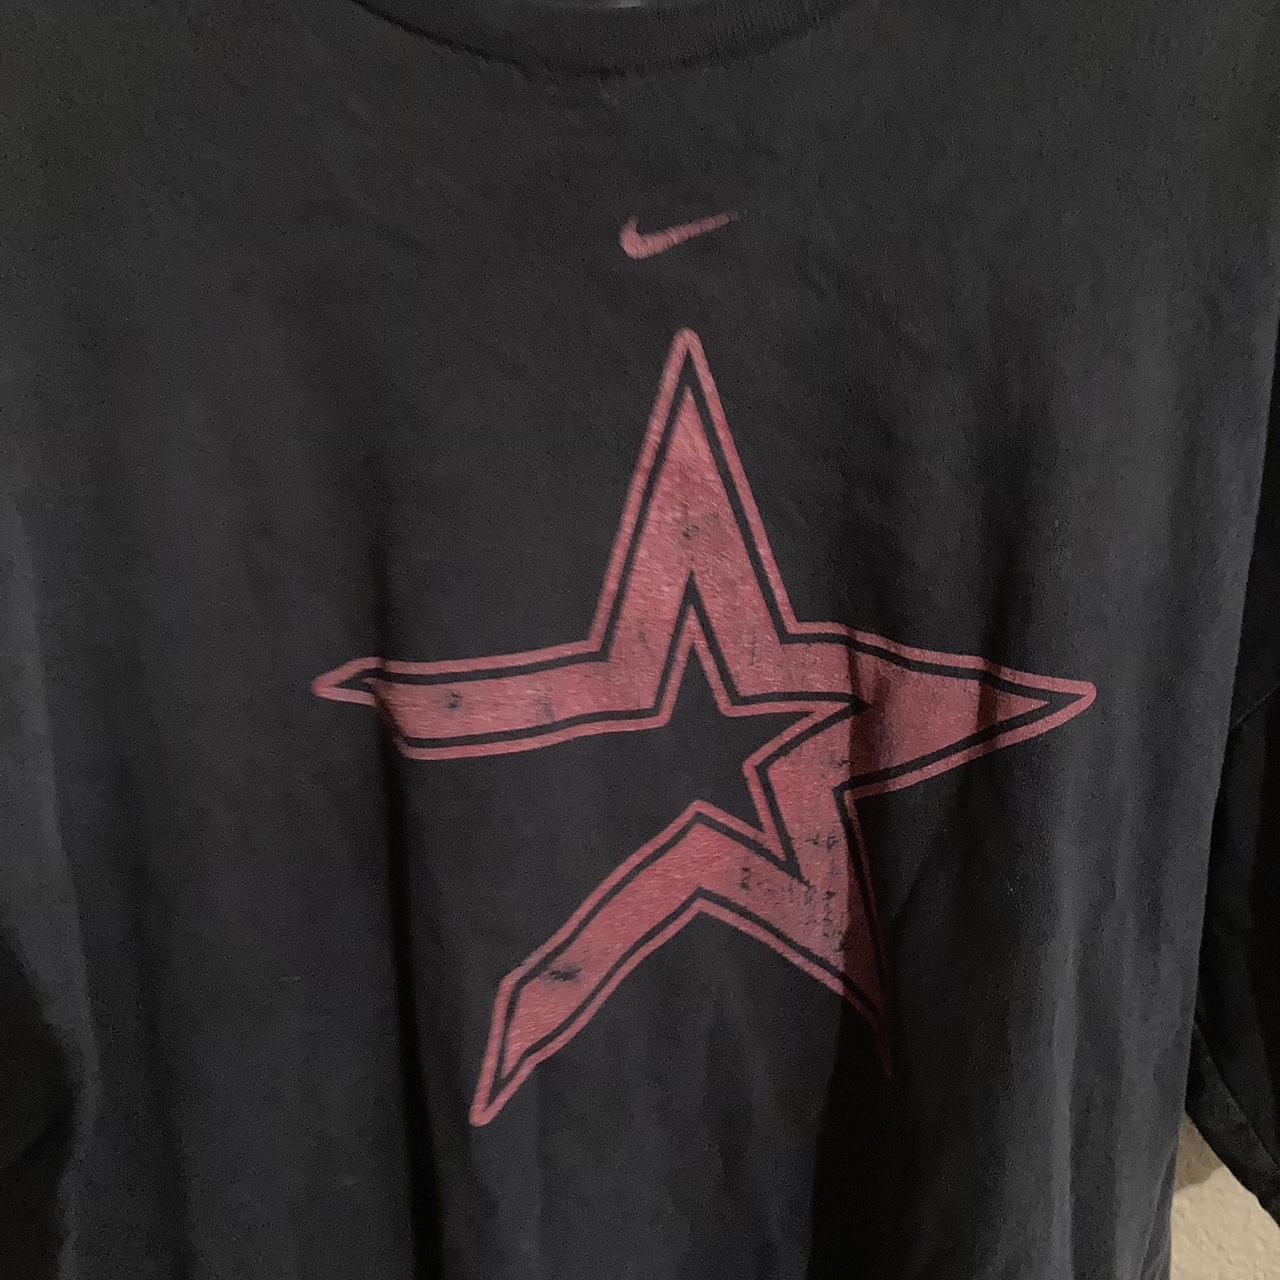 Houston Astros Nike Triple Black Jersey - Mens